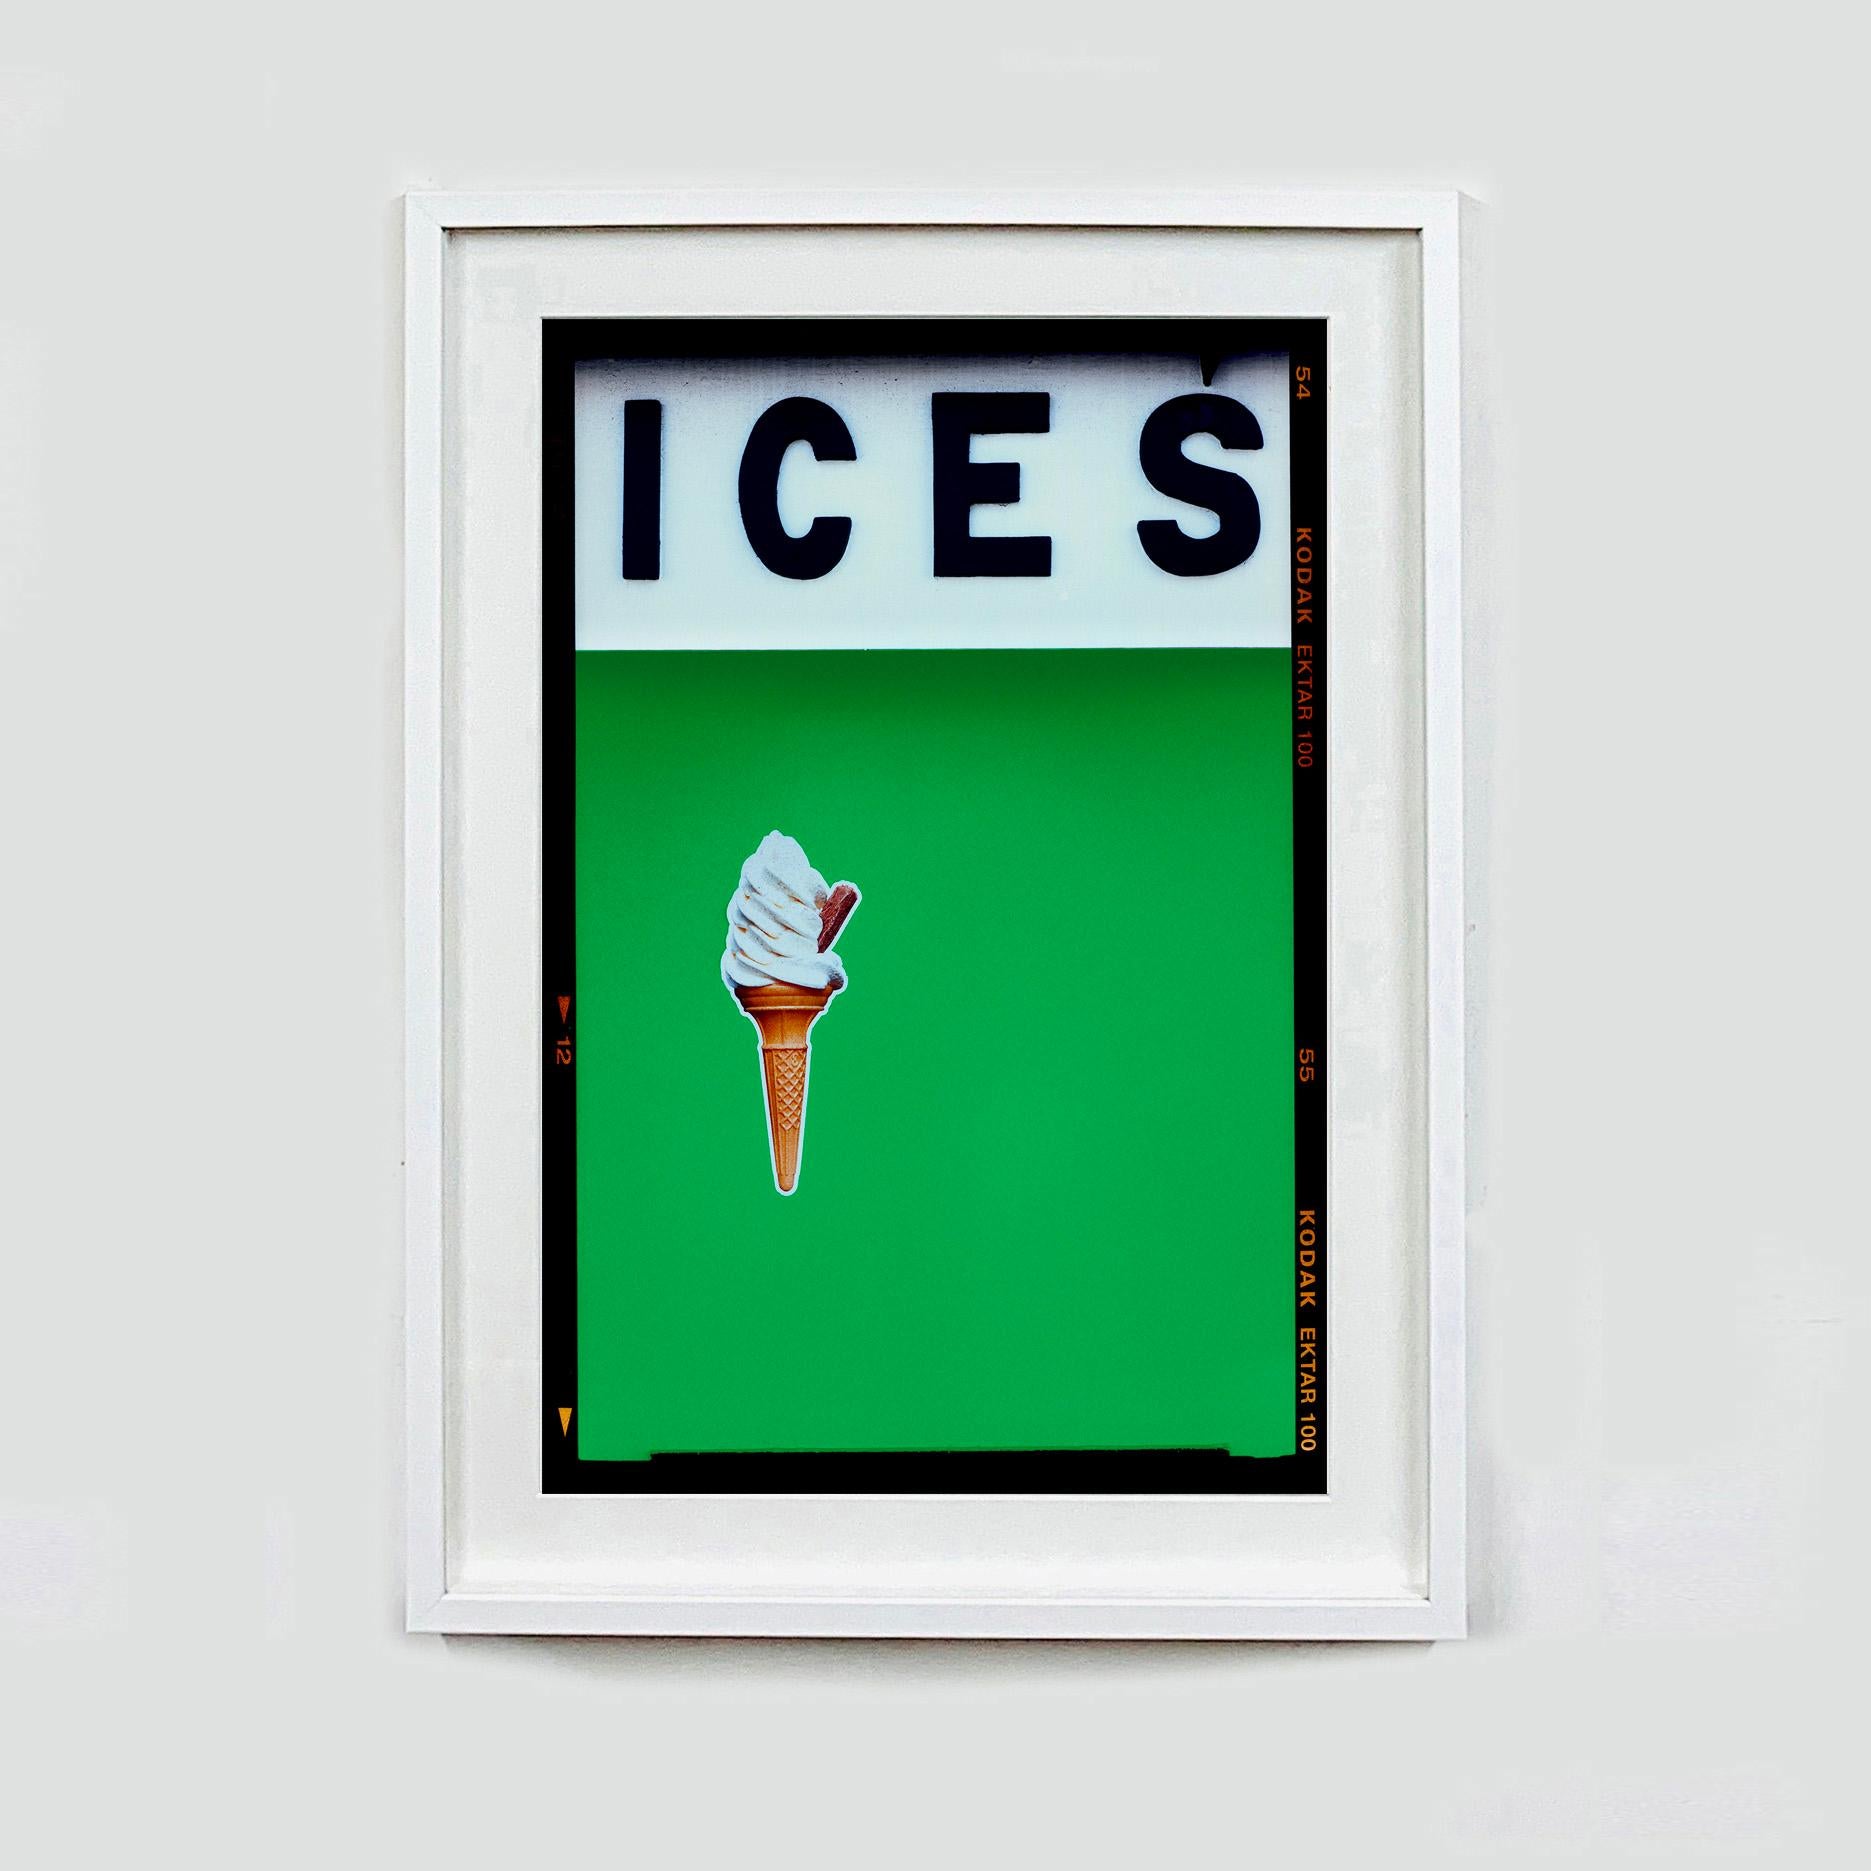 ICES - Four Framed Artworks - Pop Art Color Photography For Sale 3